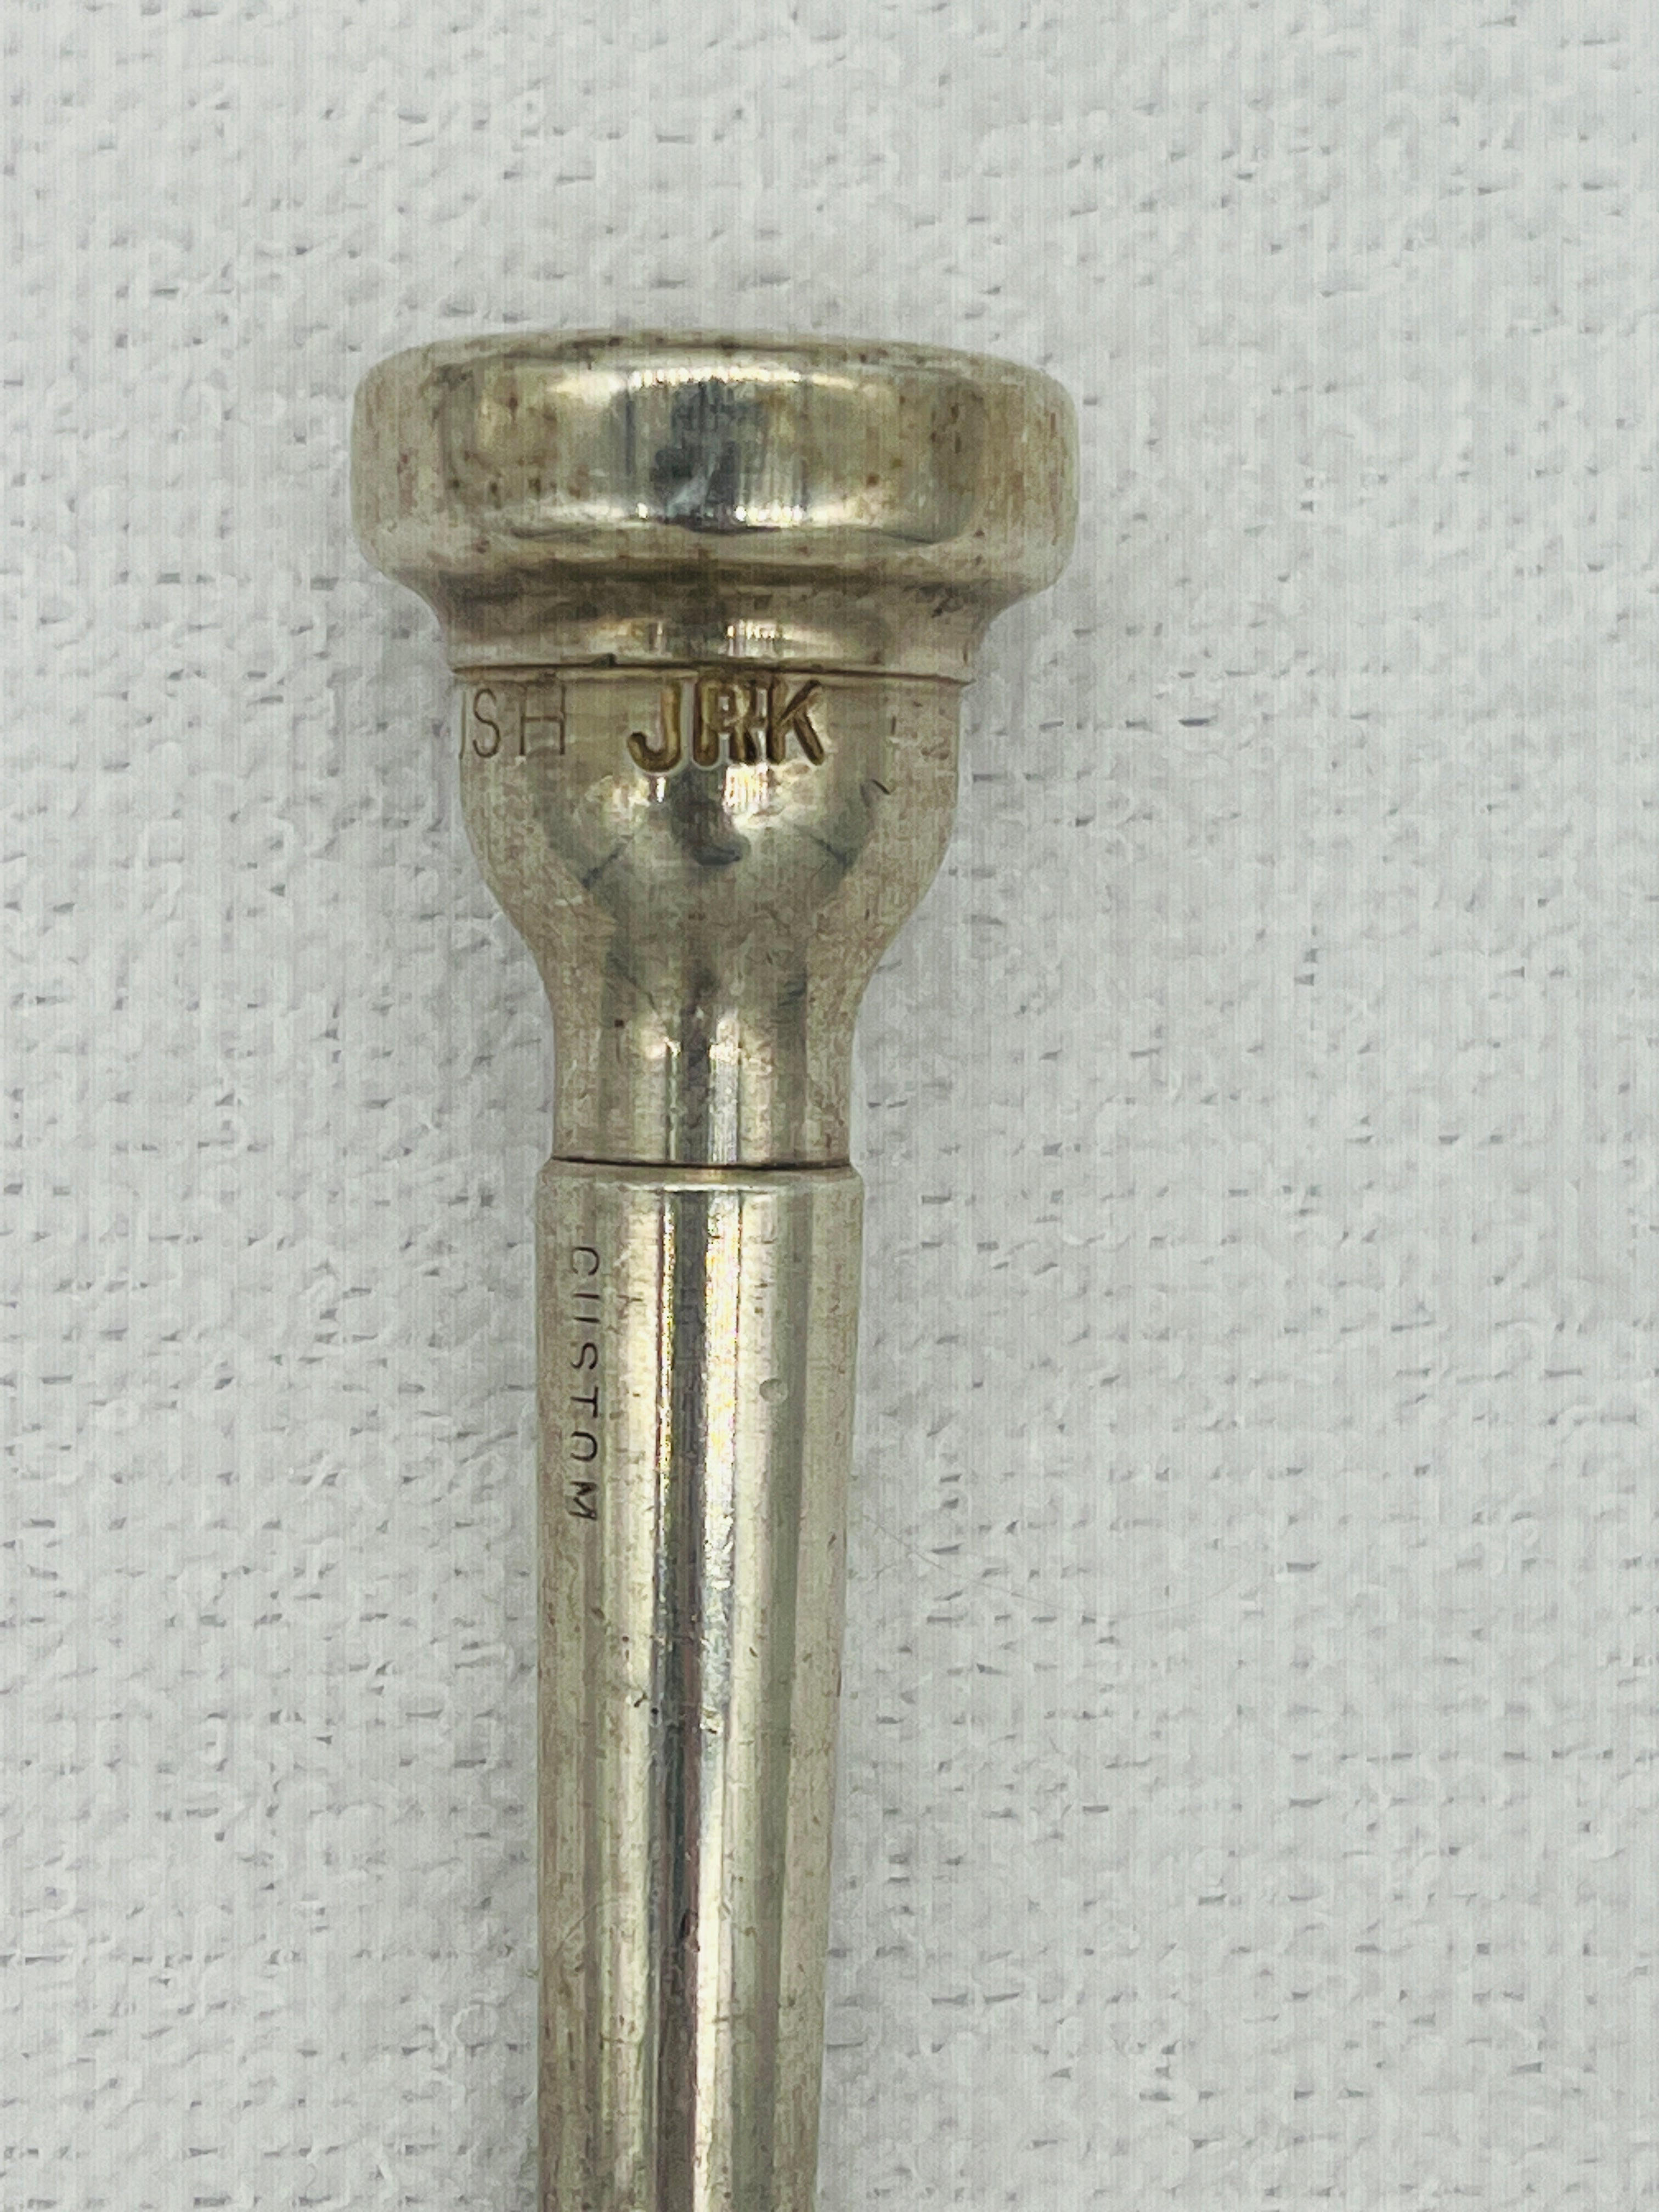 Irving R. BUSH WX3 JRK Custom Trumpet Mouthpiece USED